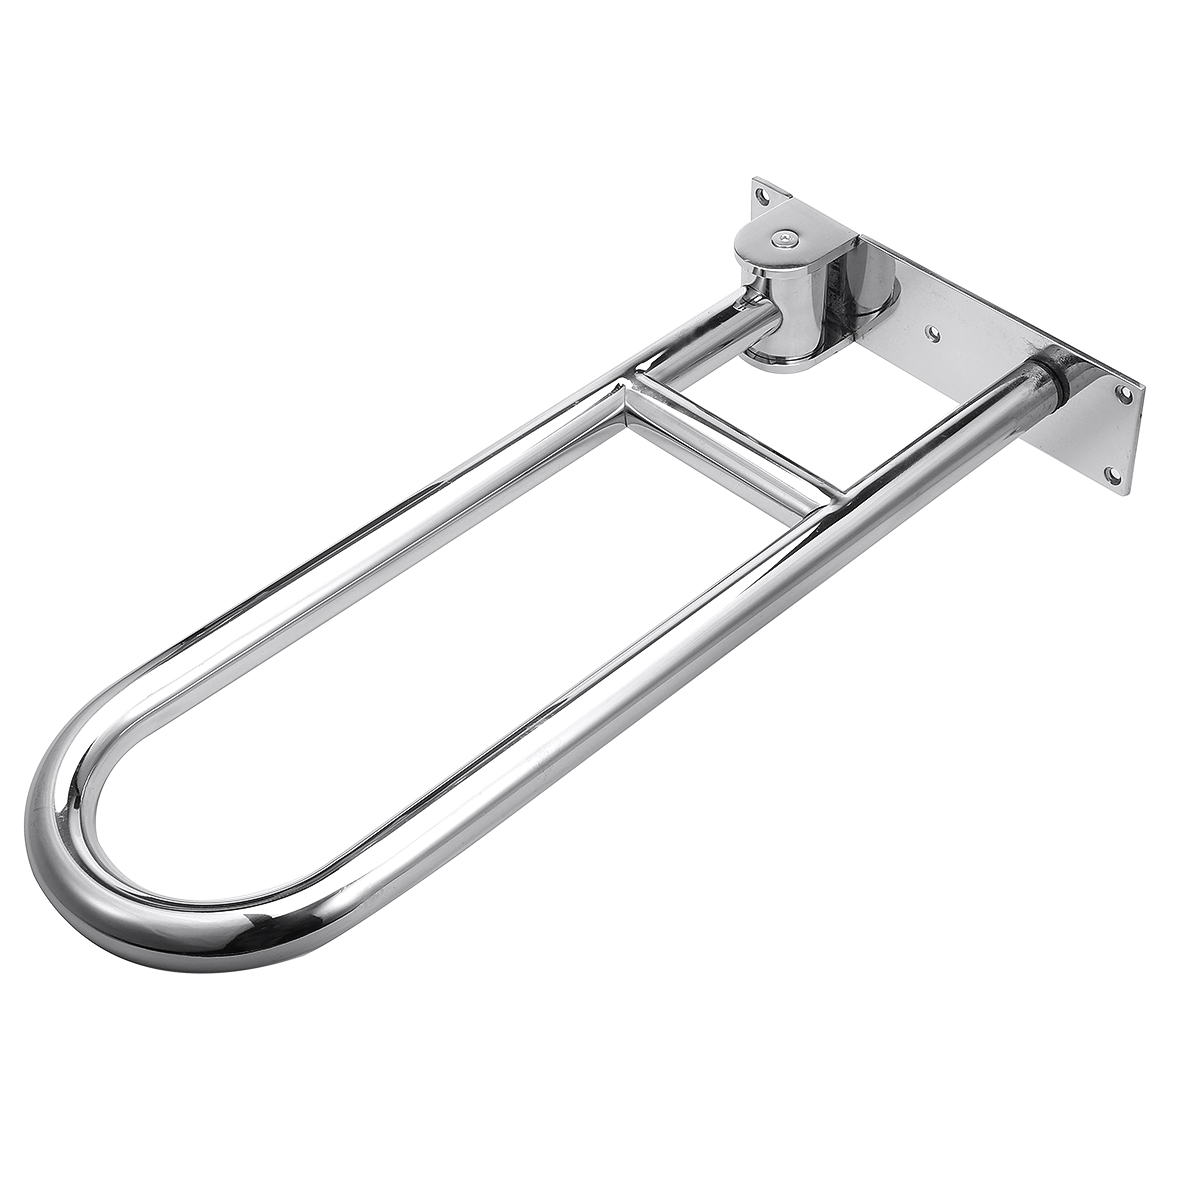 Stainless-Steel-Toilet-Safety-Frame-Rail-Grab-Bar-Handicap-Bathroom-Hand-Grips-1650108-6